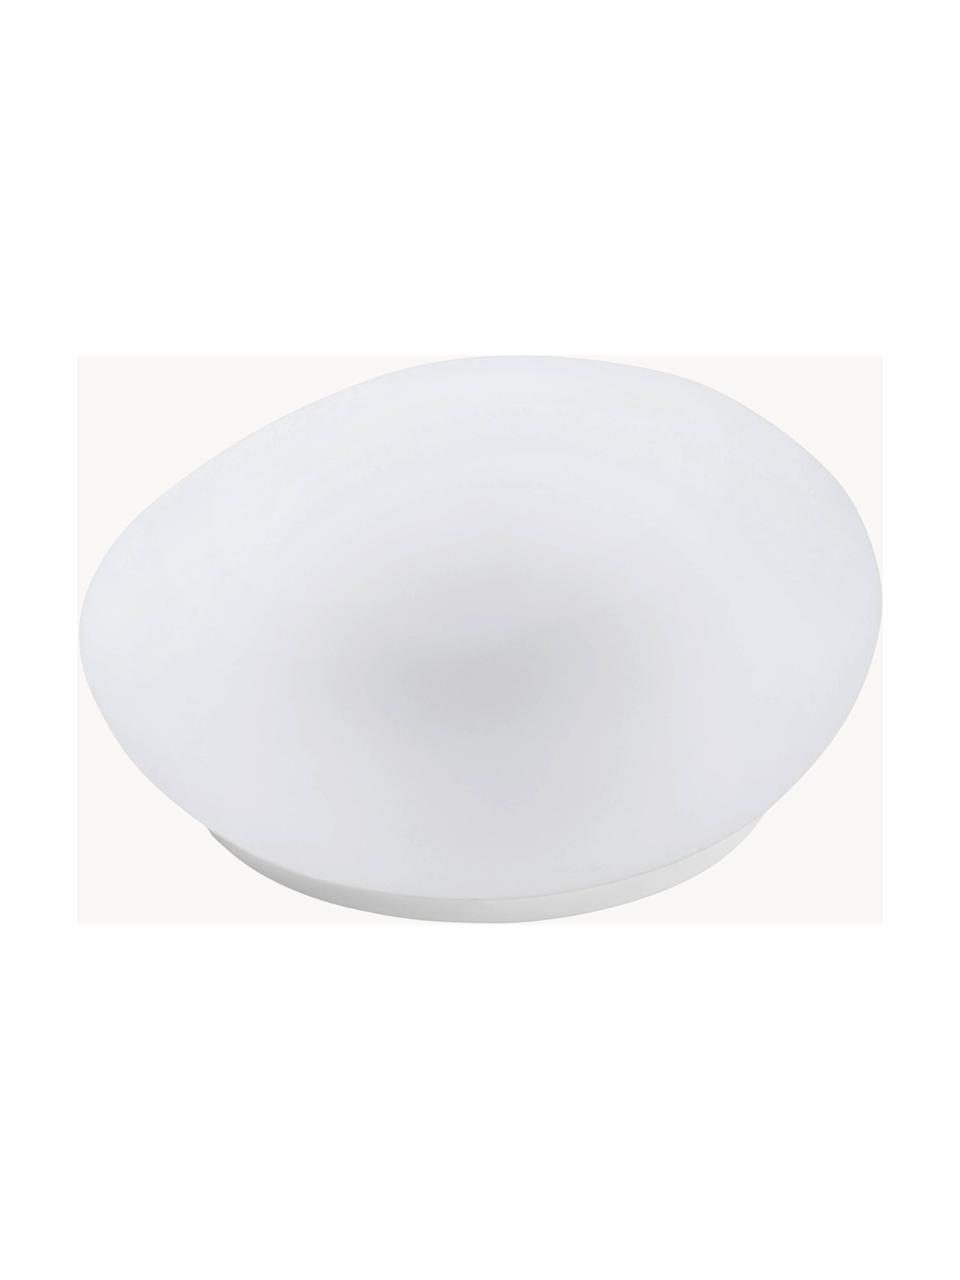 Lampa solarna LED Pebble, Biały, S 14 x W 10 cm